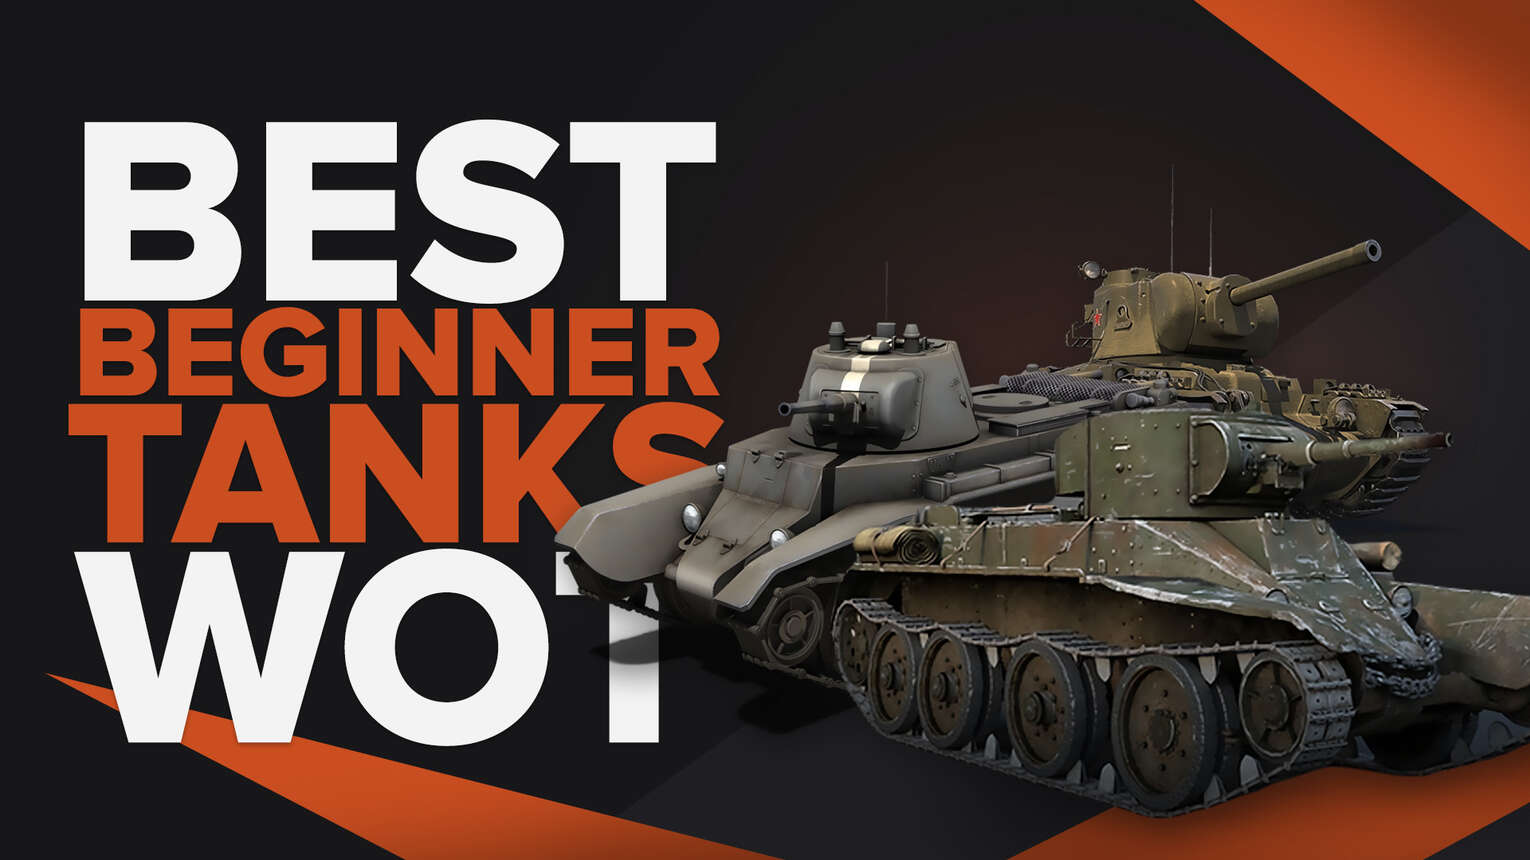 Best Beginner Tanks in World of Tanks For A Smooth Start